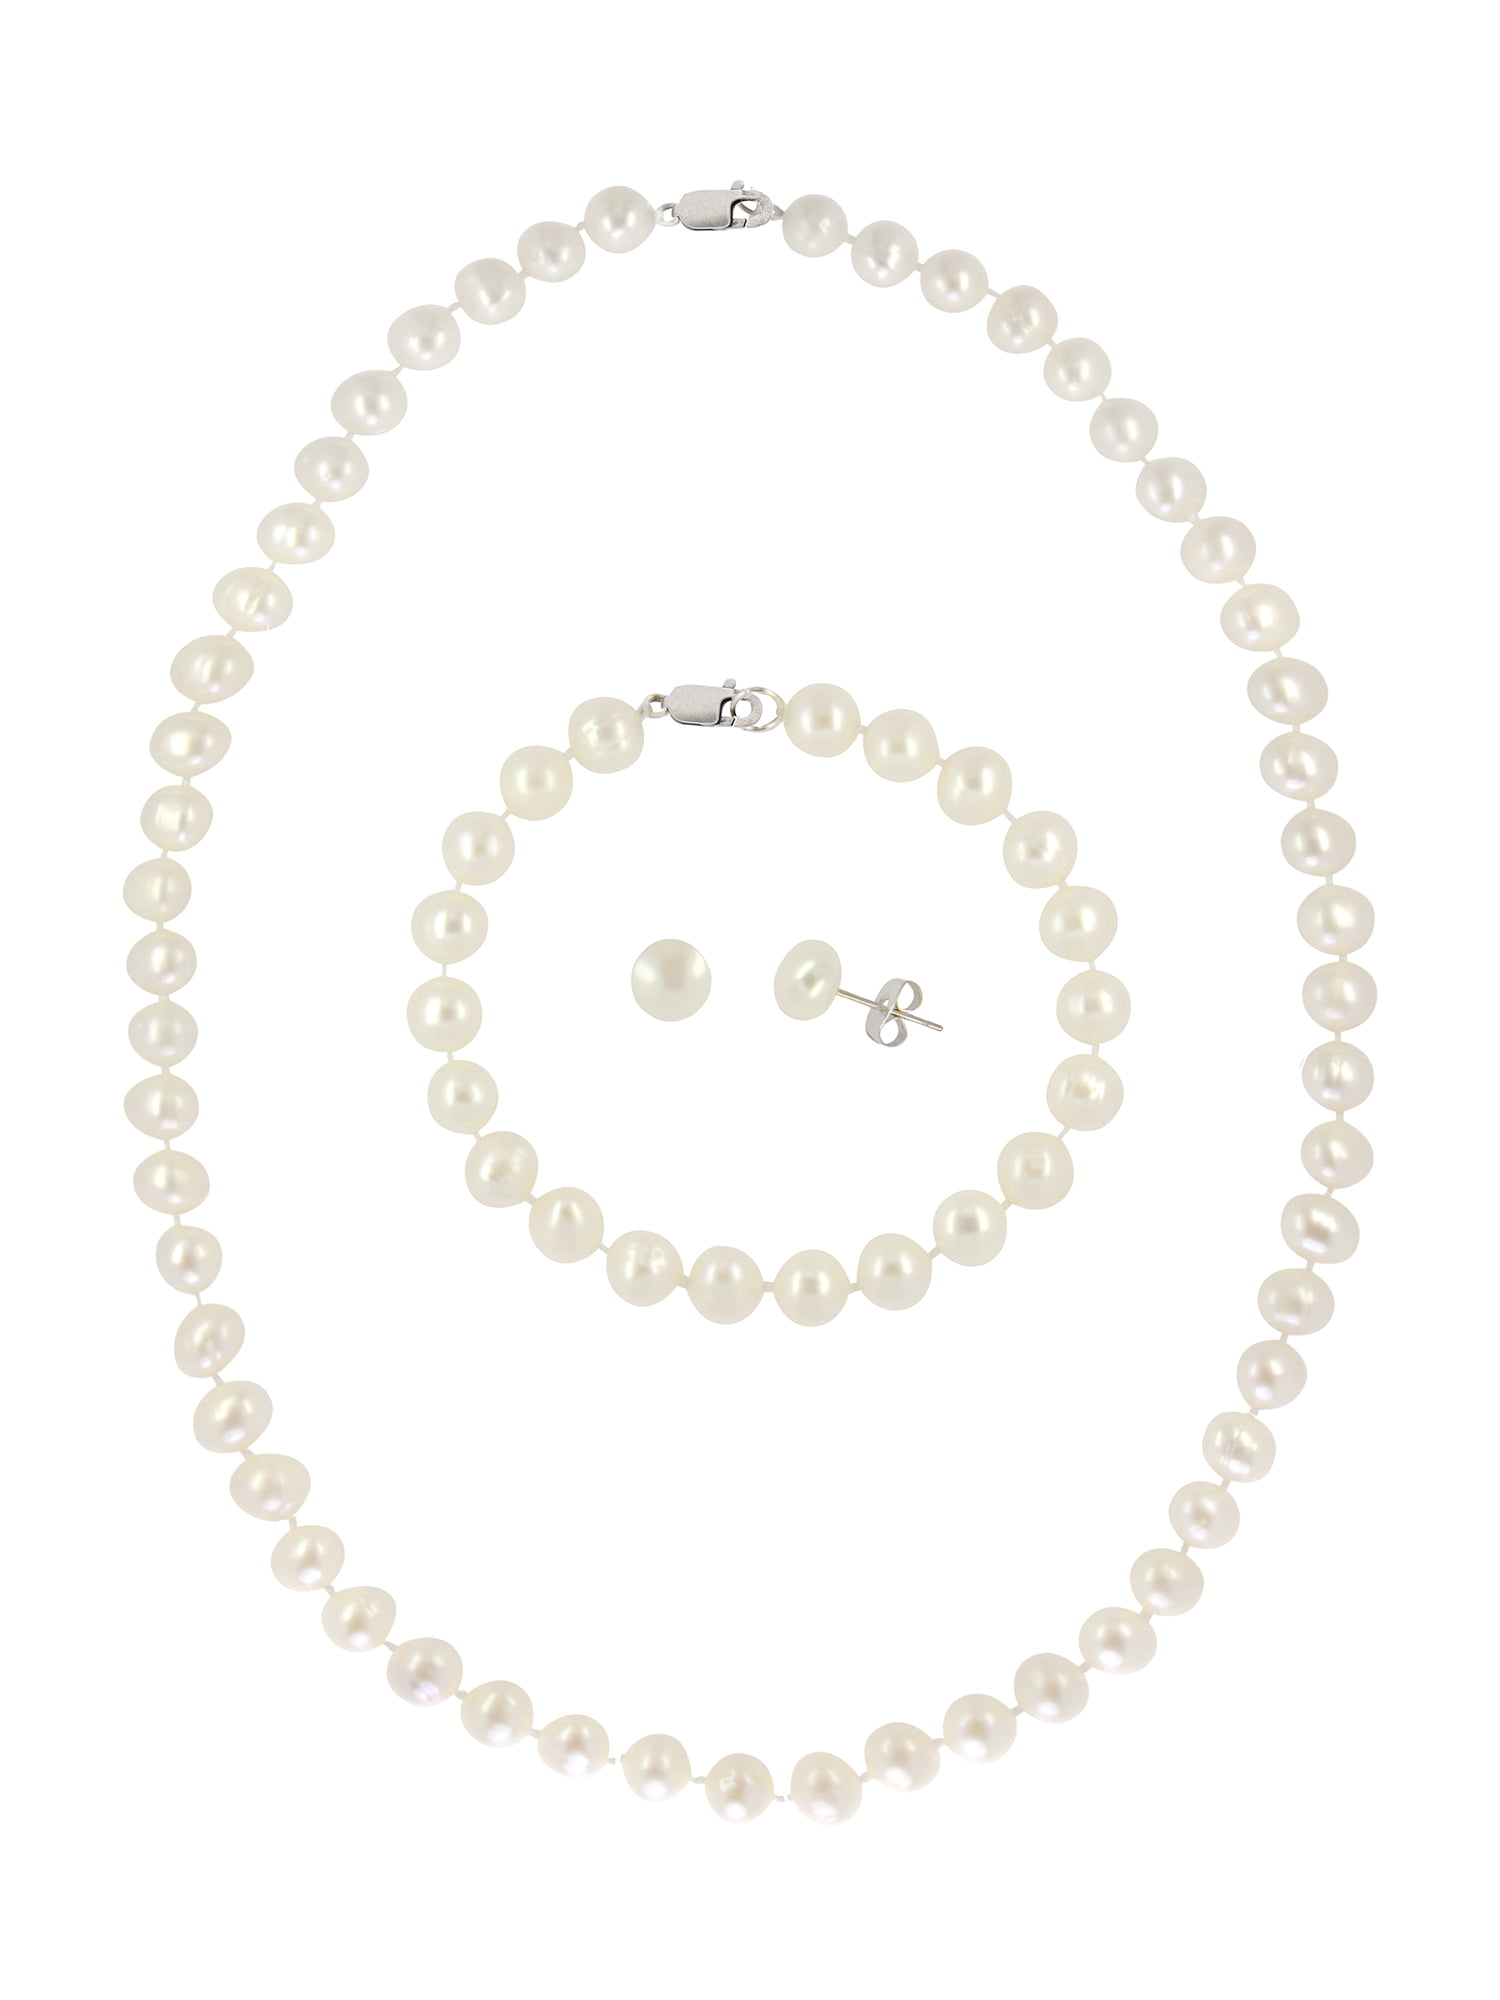 Three Piece Custom Made Glass Pearl Jewellery Set Necklace Bracelet Earrings 33W 